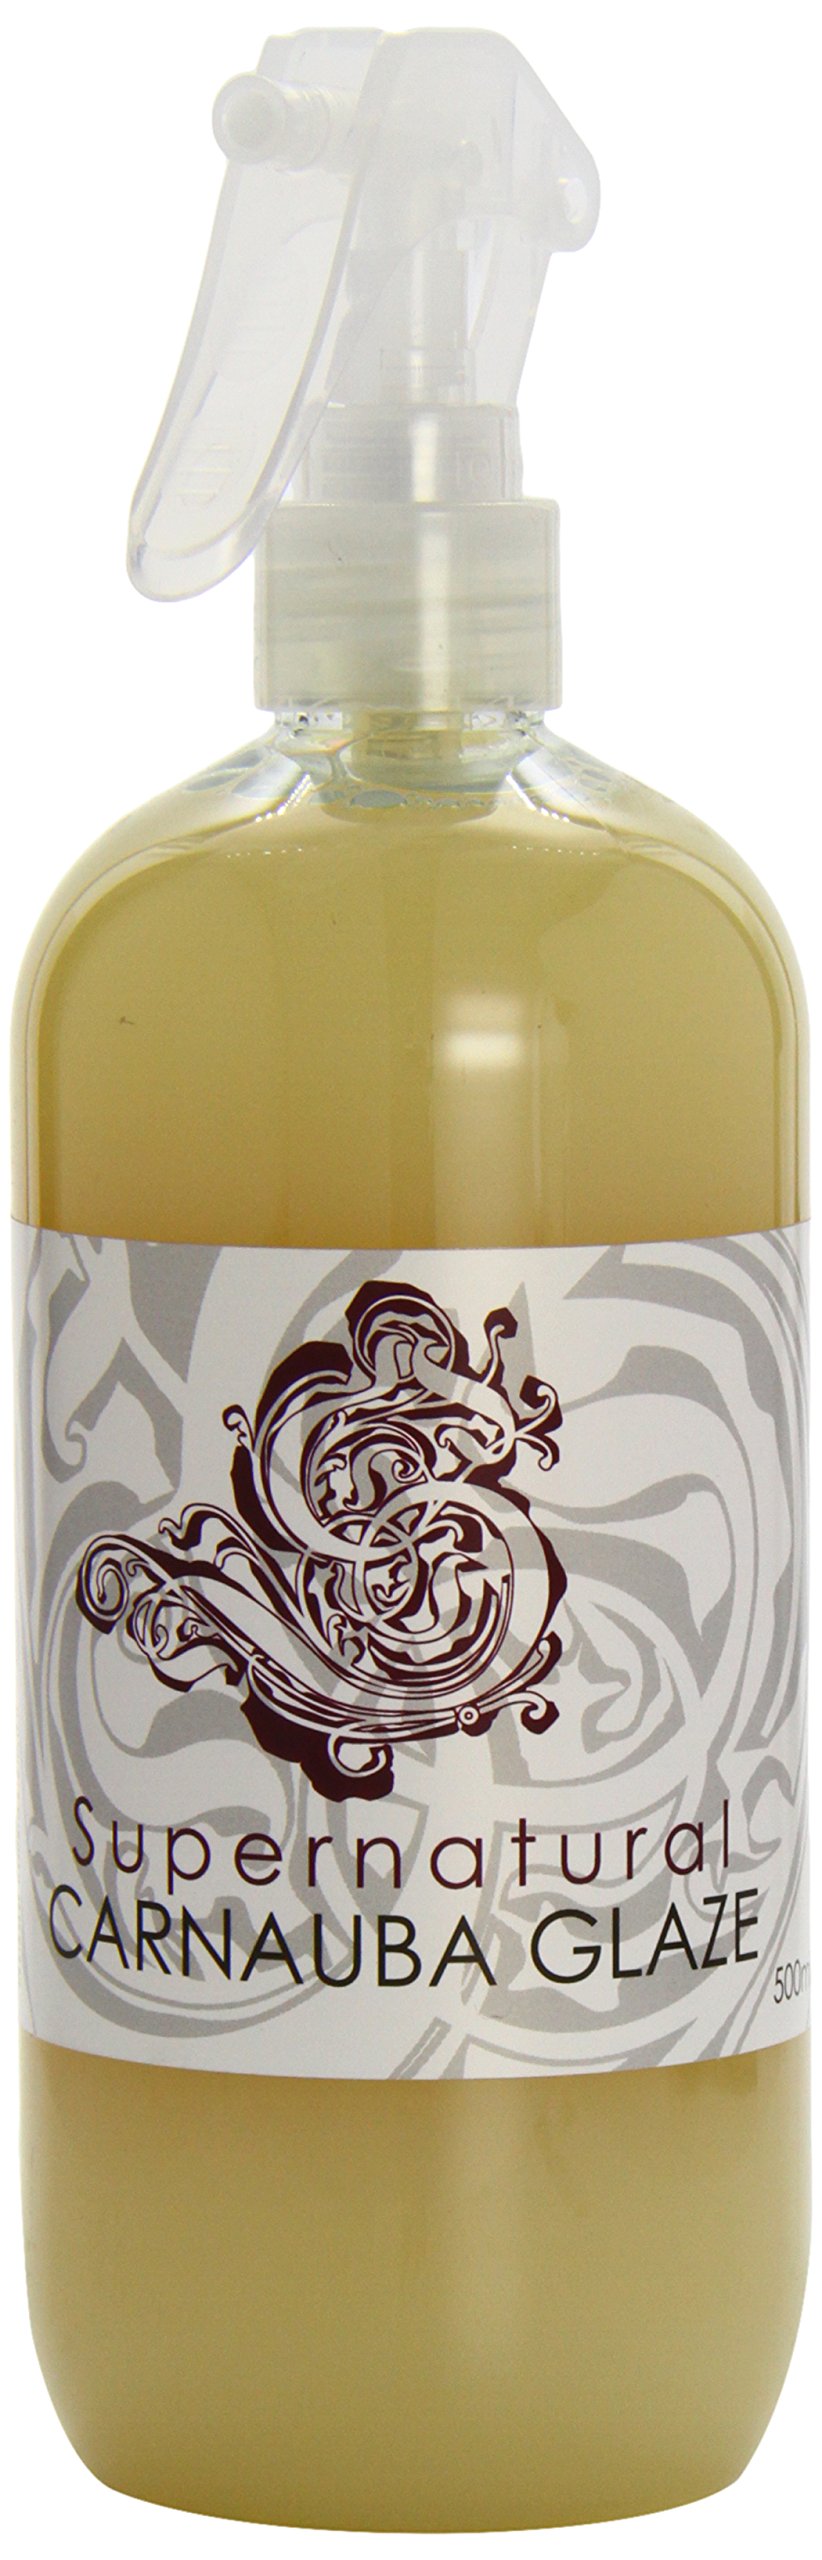 Dodo Juice - Supernatural Carnauba Glaze Detailer - 500ml von Dodo Juice